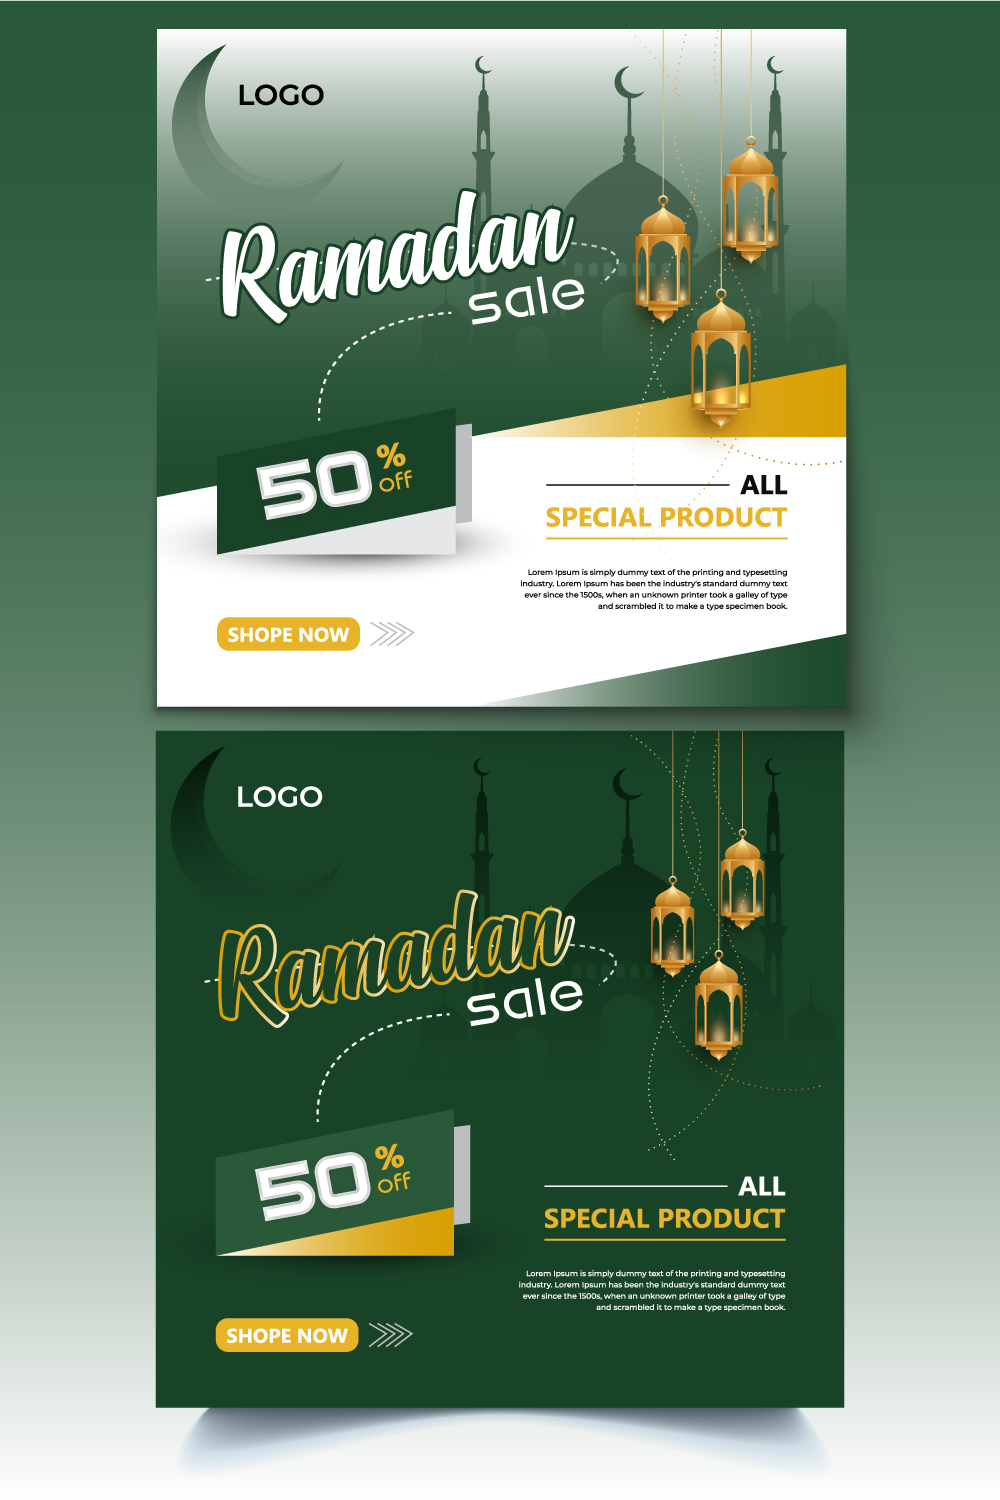 Ramadan sale social media post template Featureg pinterest preview image.